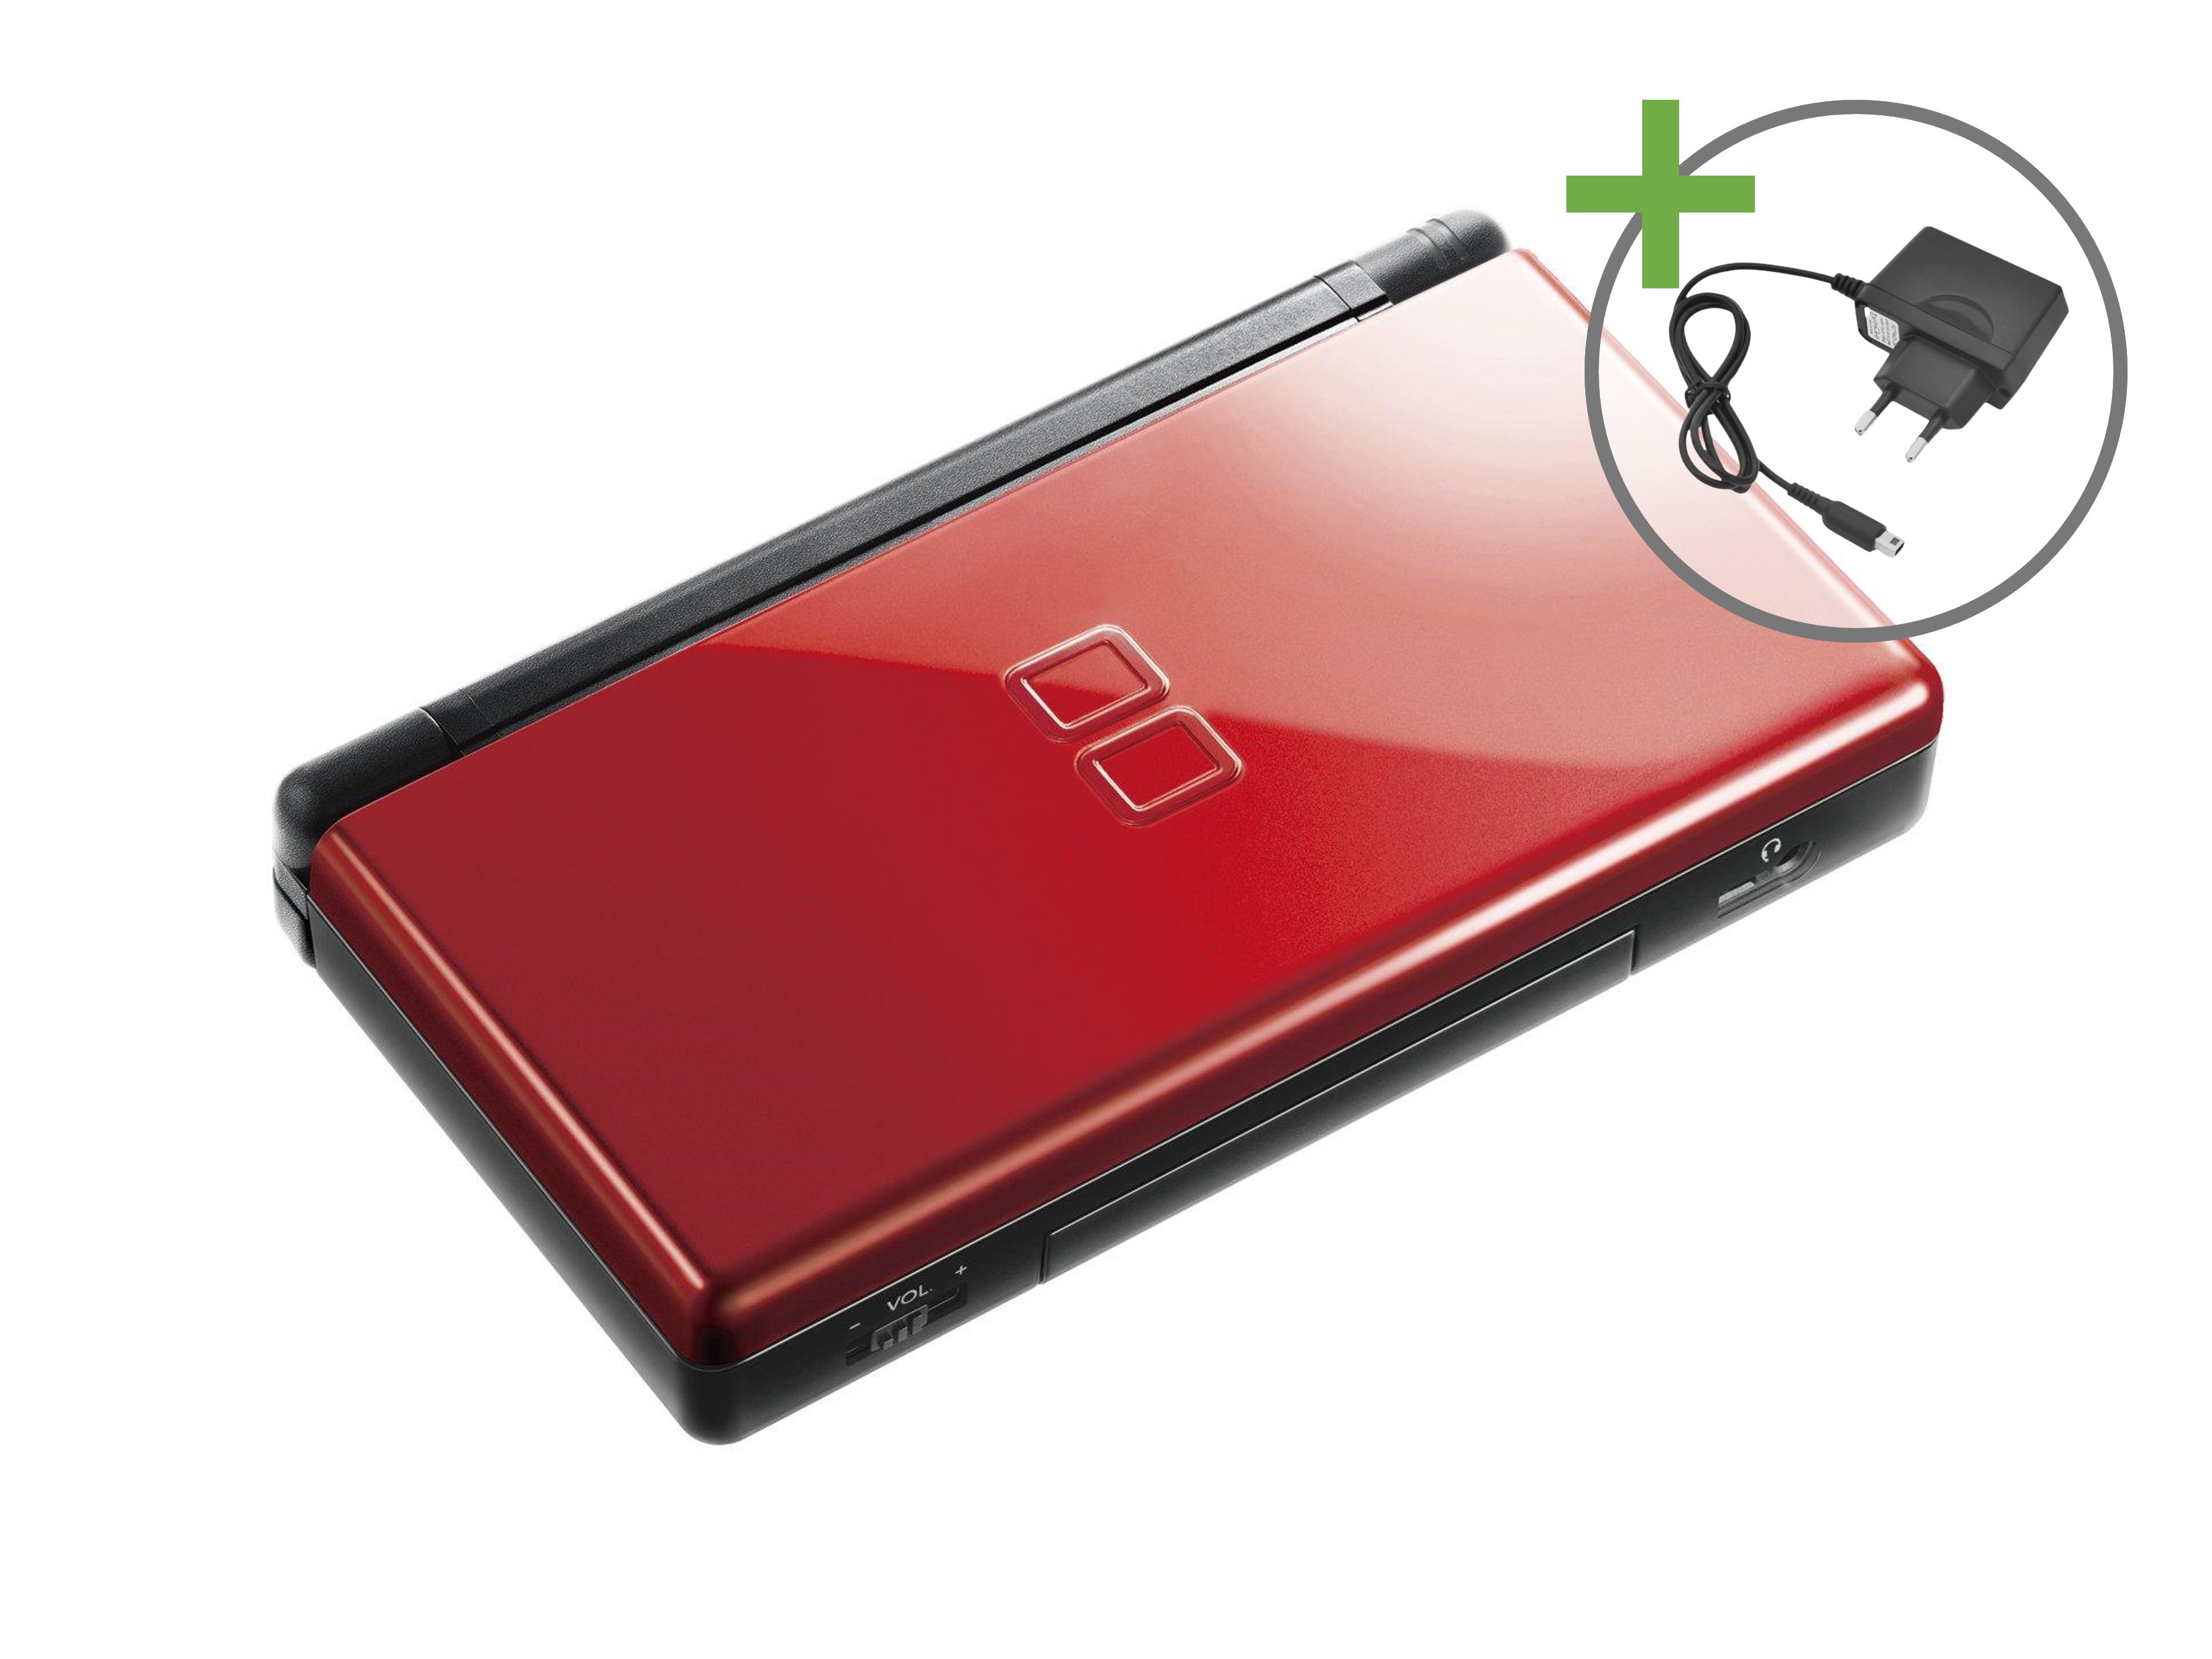 Nintendo DS Lite - Crimson Red/Black - Nintendo DS Hardware - 2